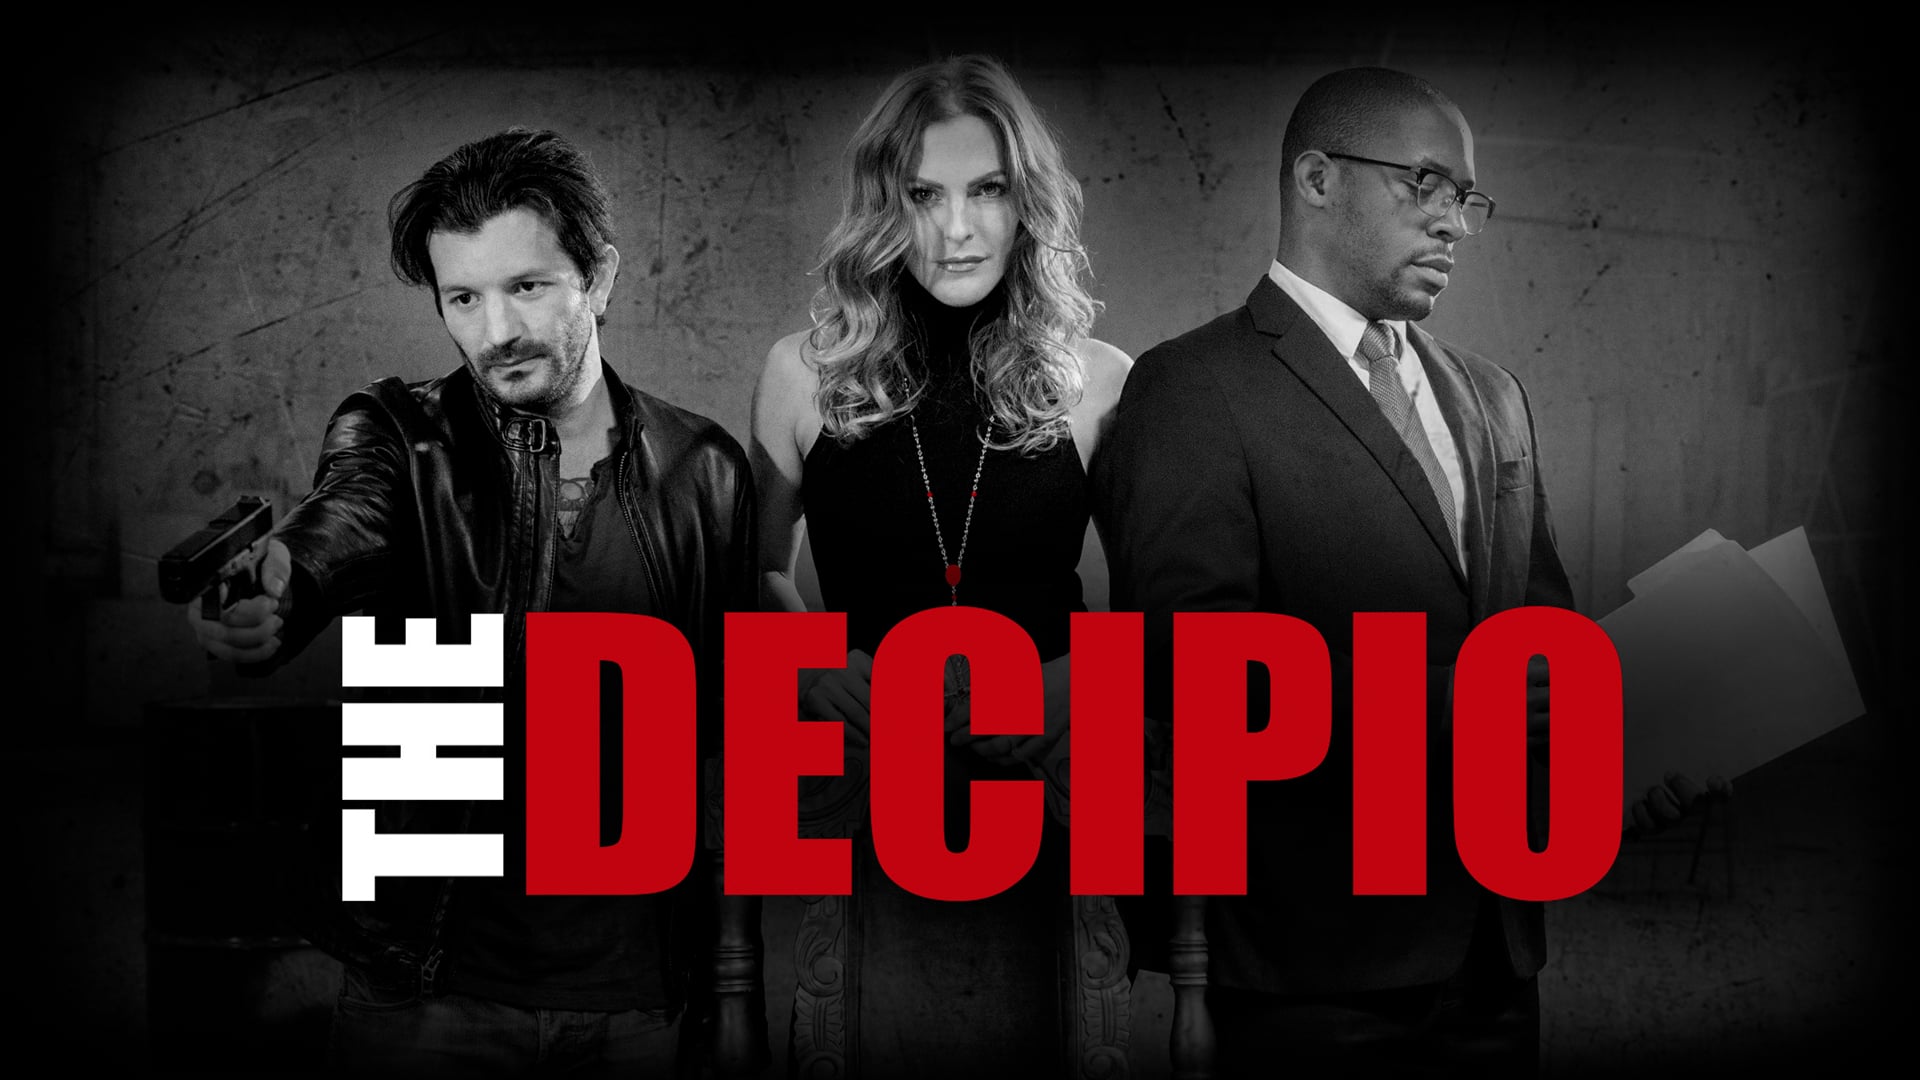 The Decipio | Official Trailer | 2021